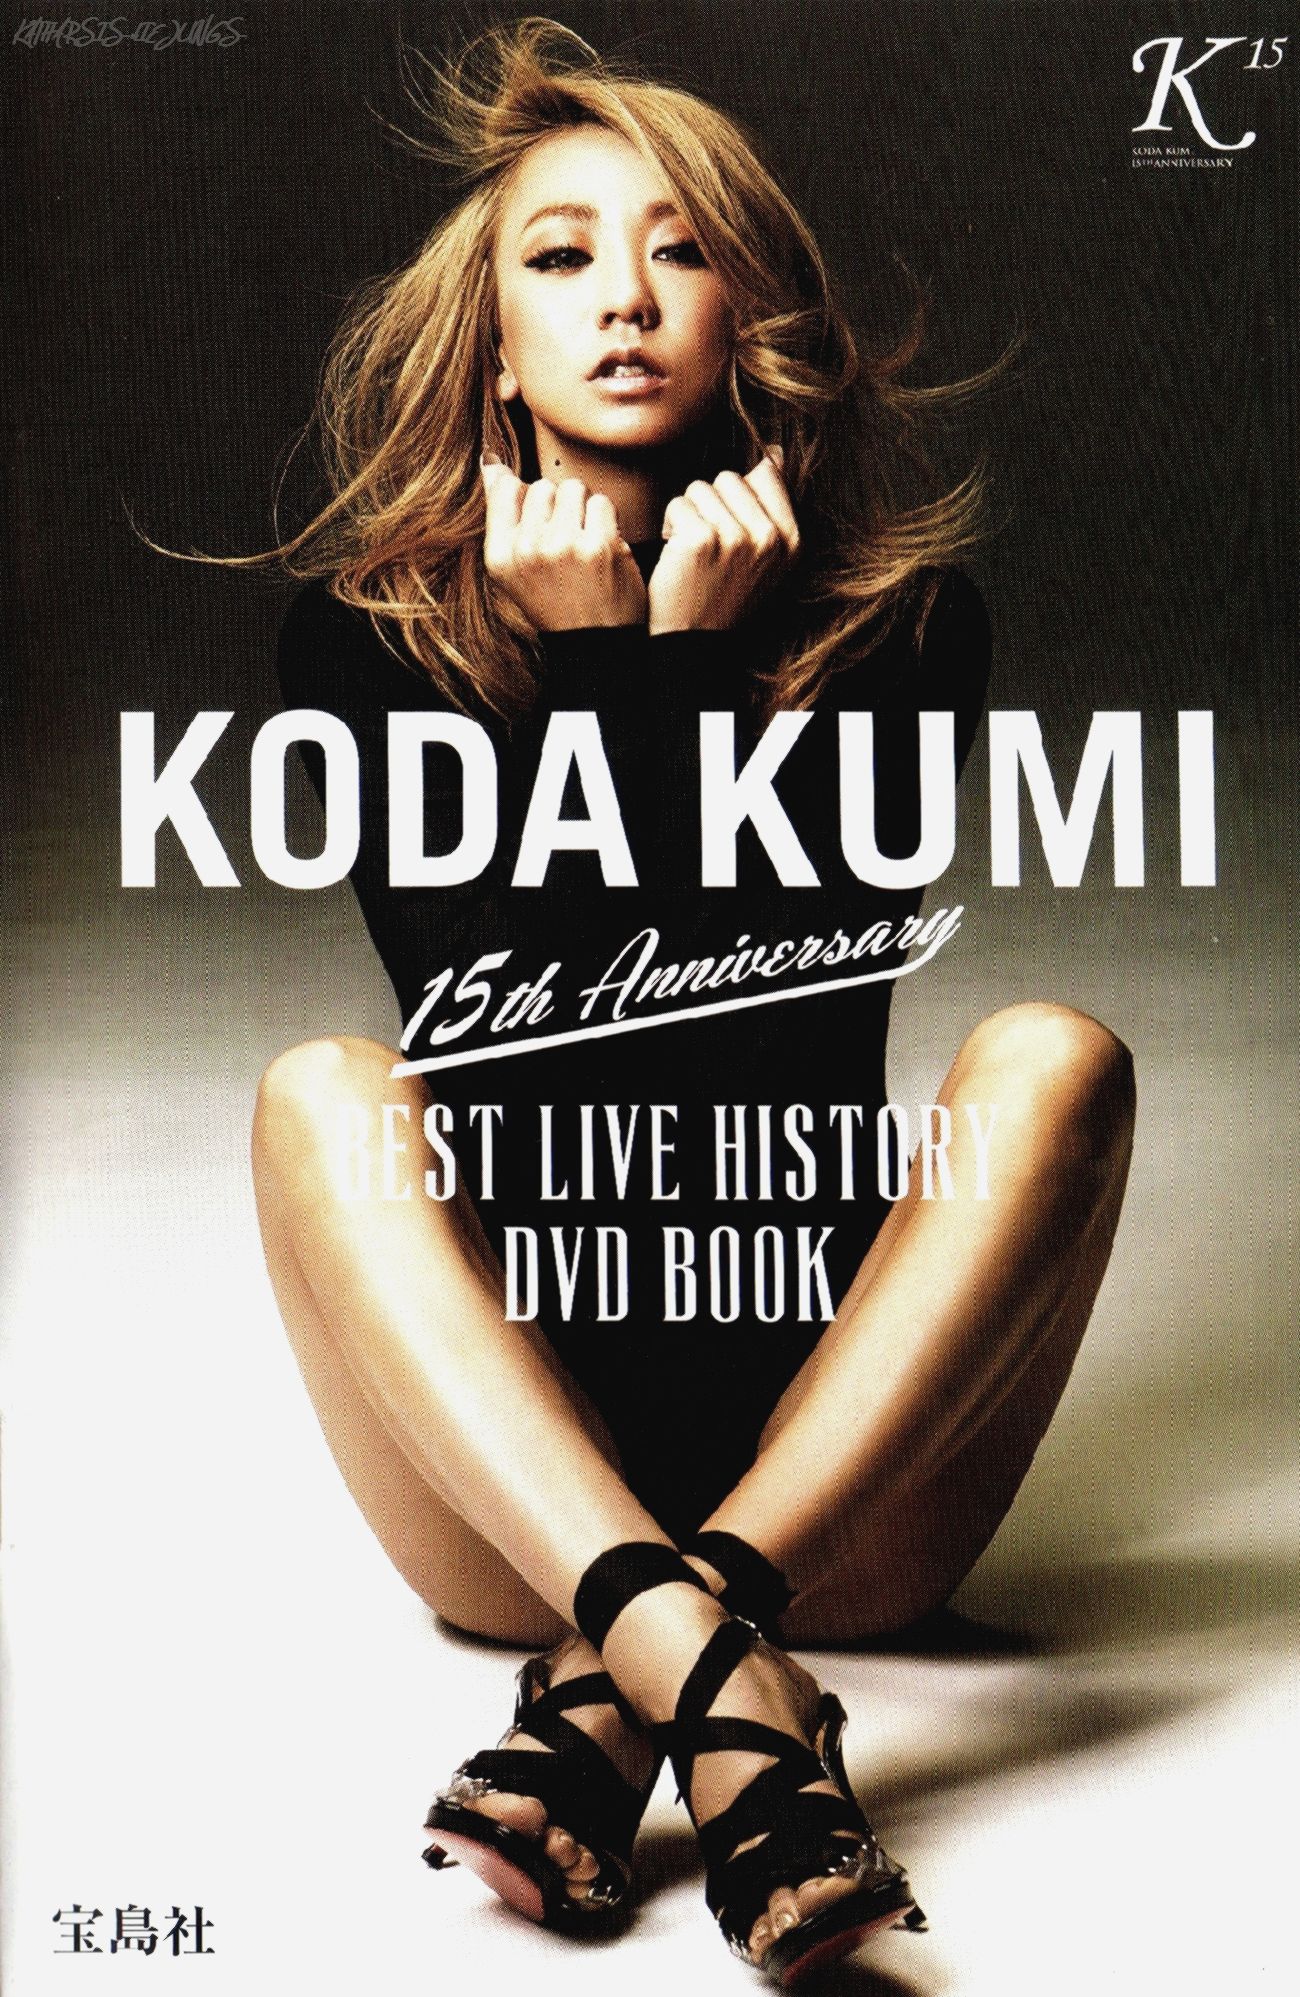 15th Anniversary Best Live History DVD Book (DVD)